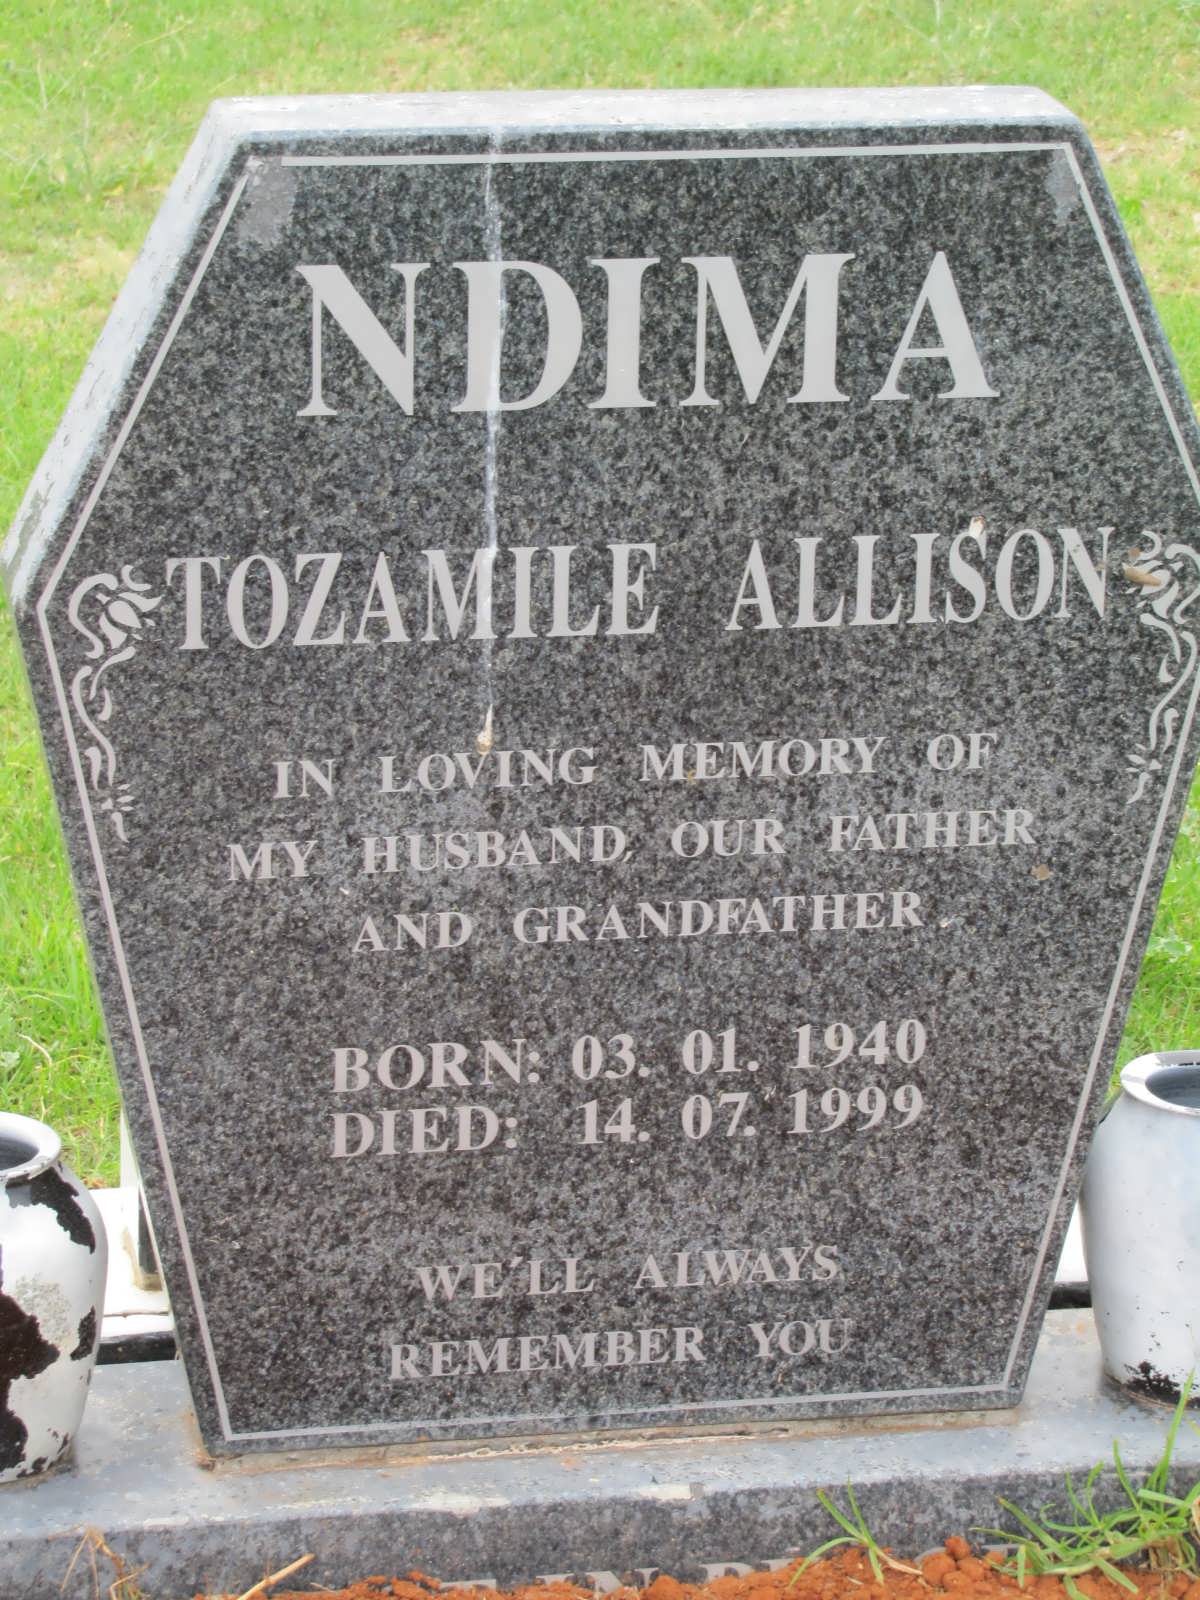 NDIMA Tozamile Allison 1940-1999